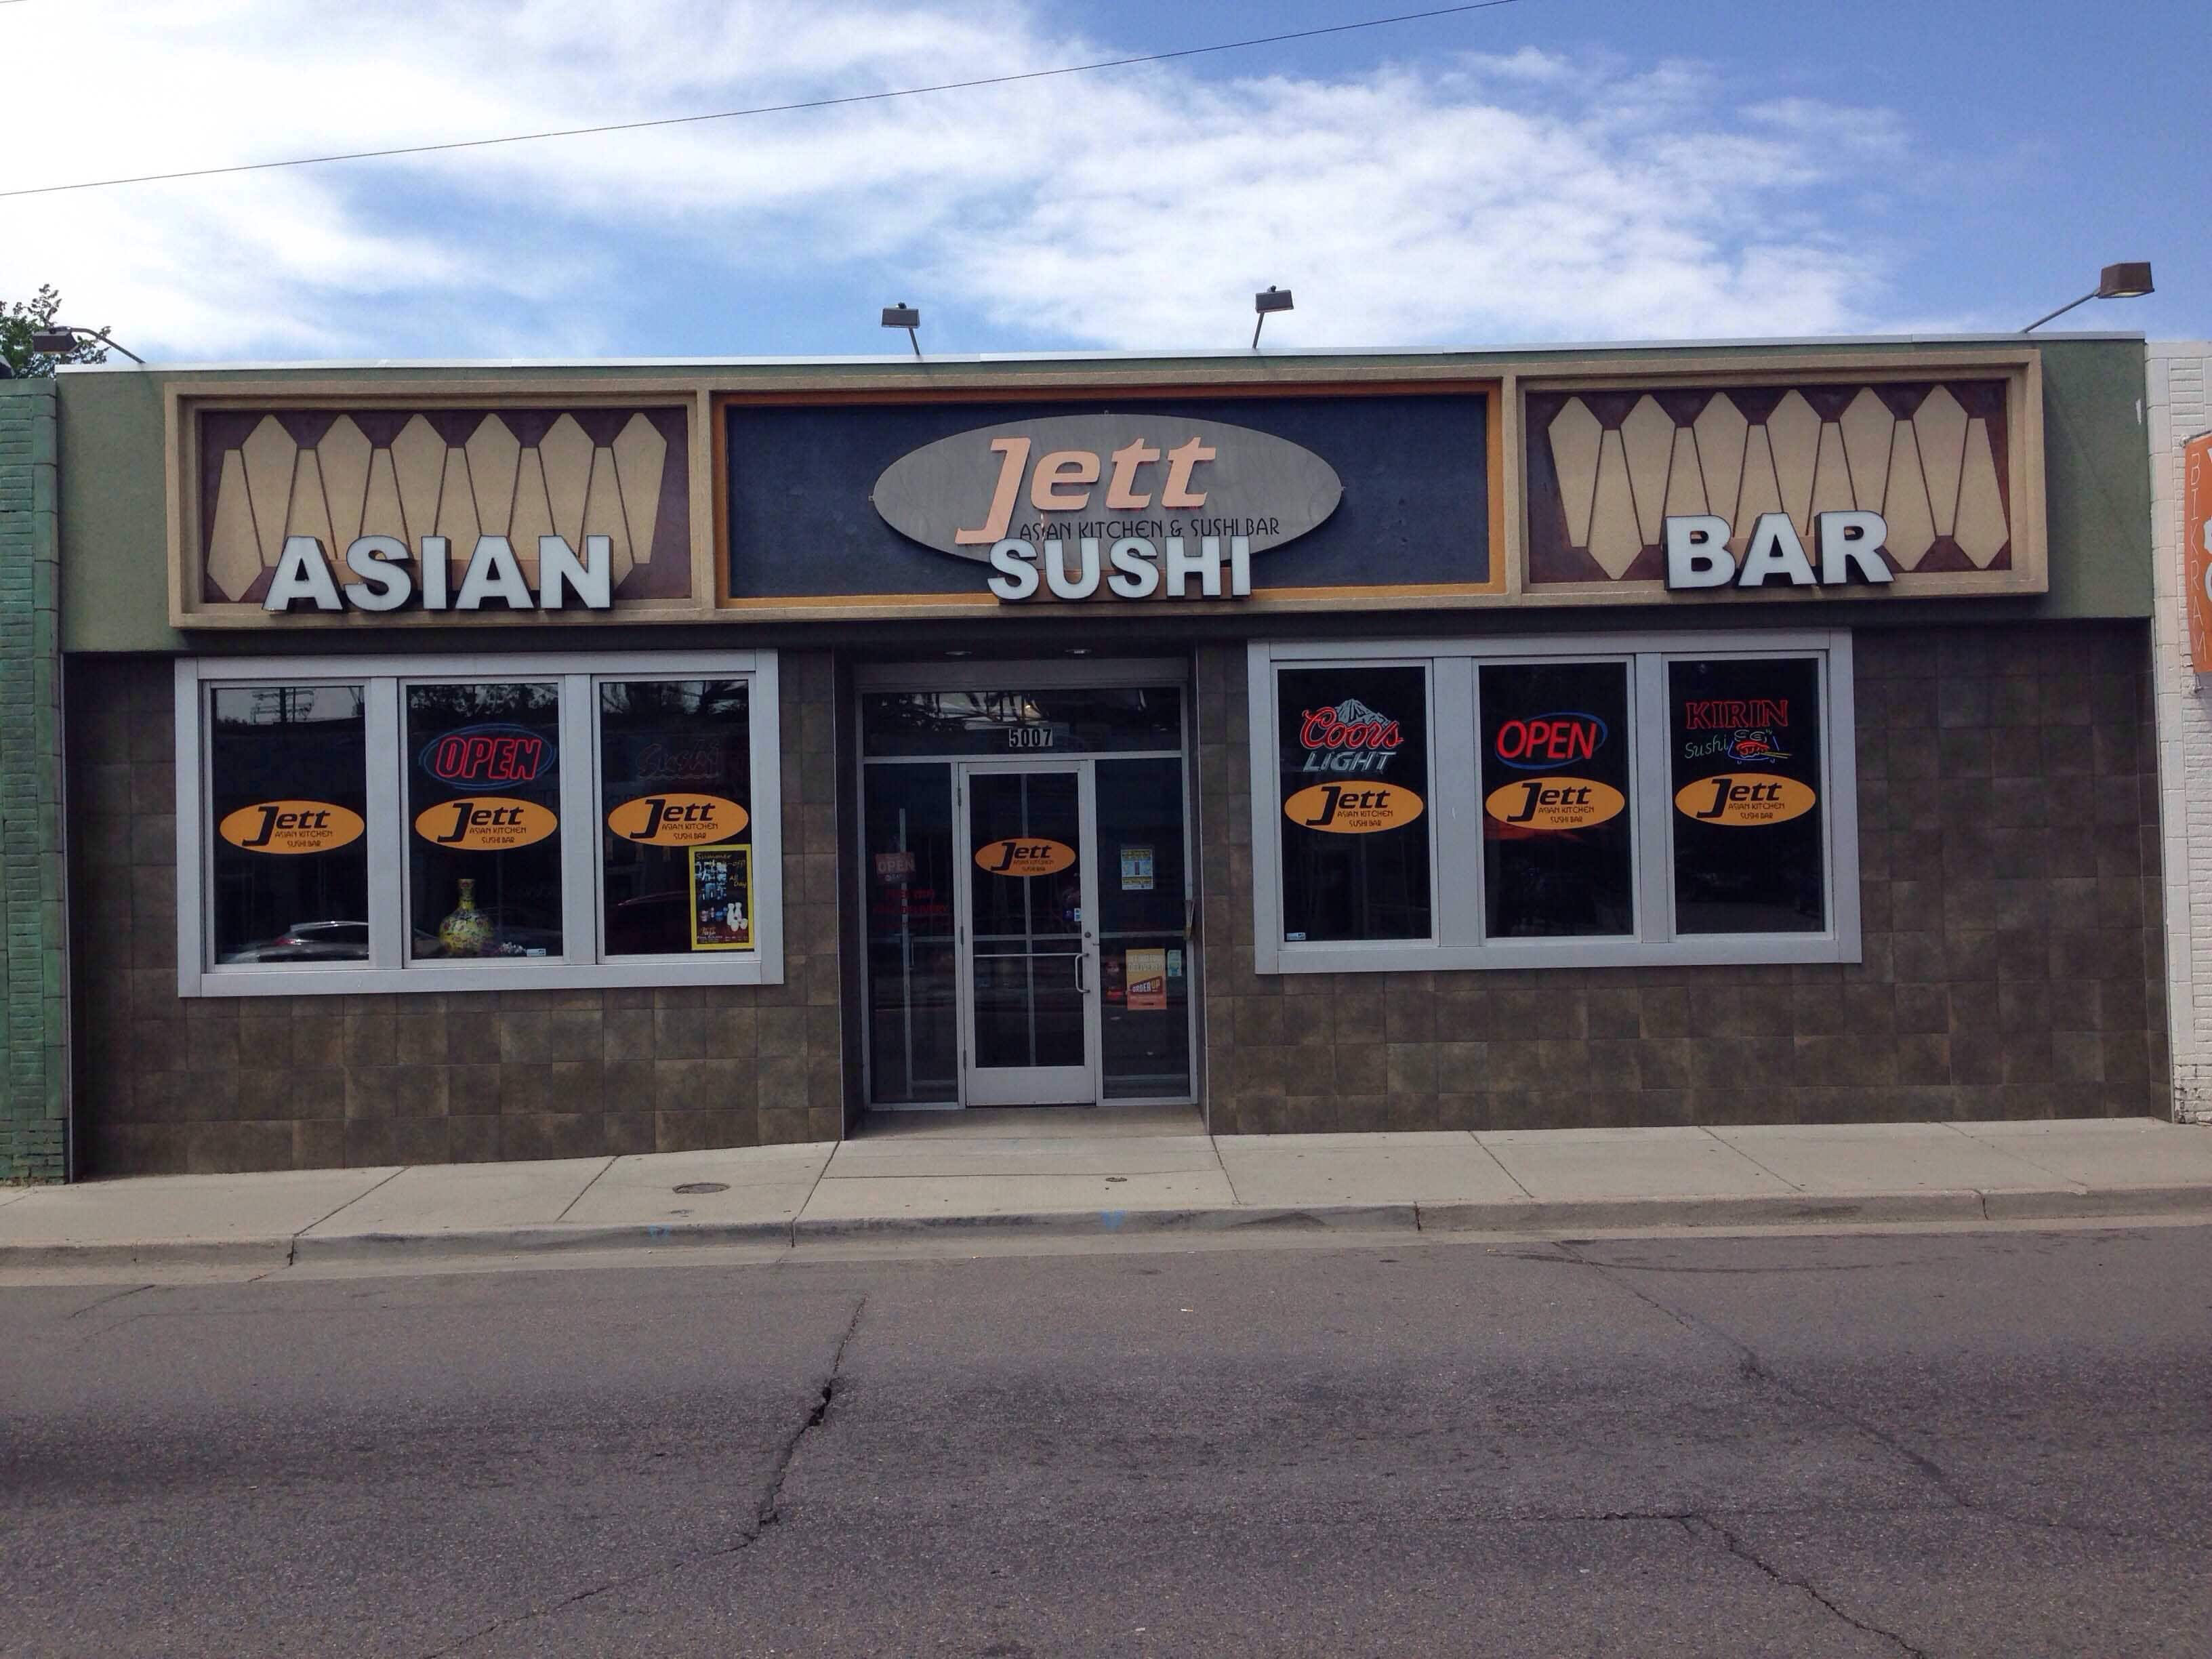 jett asian kitchen and sushi bar denver co 80220